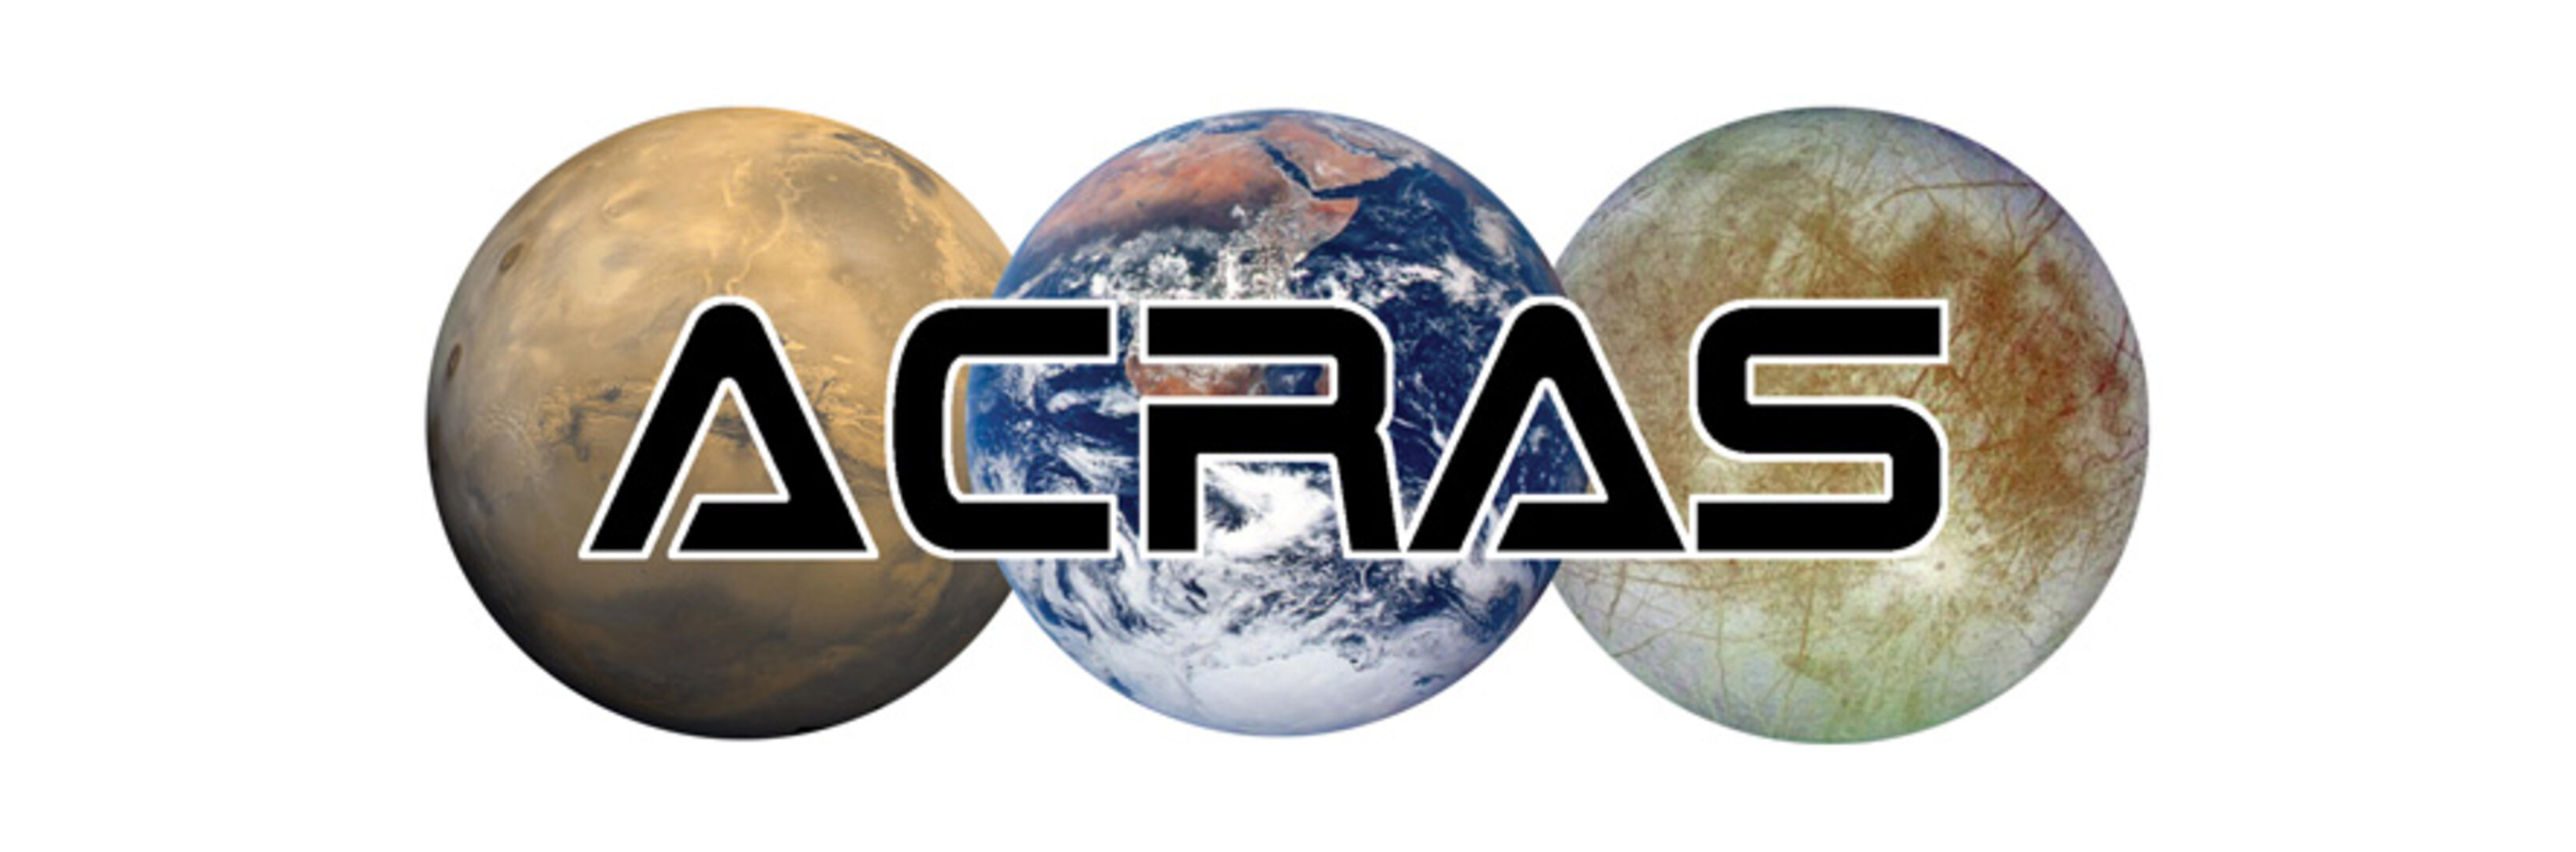 ACRAS projektet - radarteknologi med anvendelse på både Jorden, Mars, Titan og Jupiter-månen Europa.